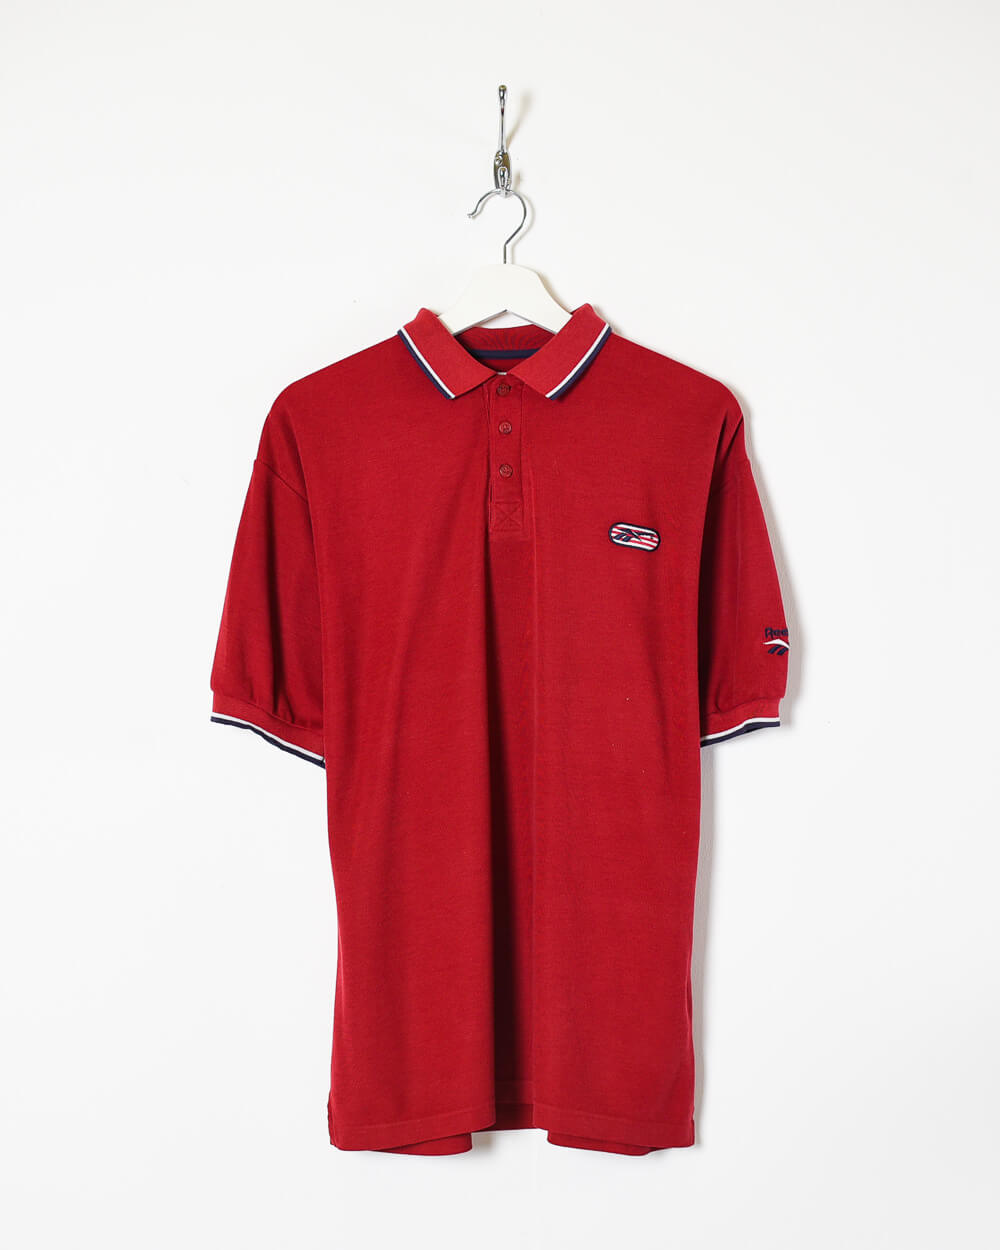 Red Reebok Polo Shirt - Large